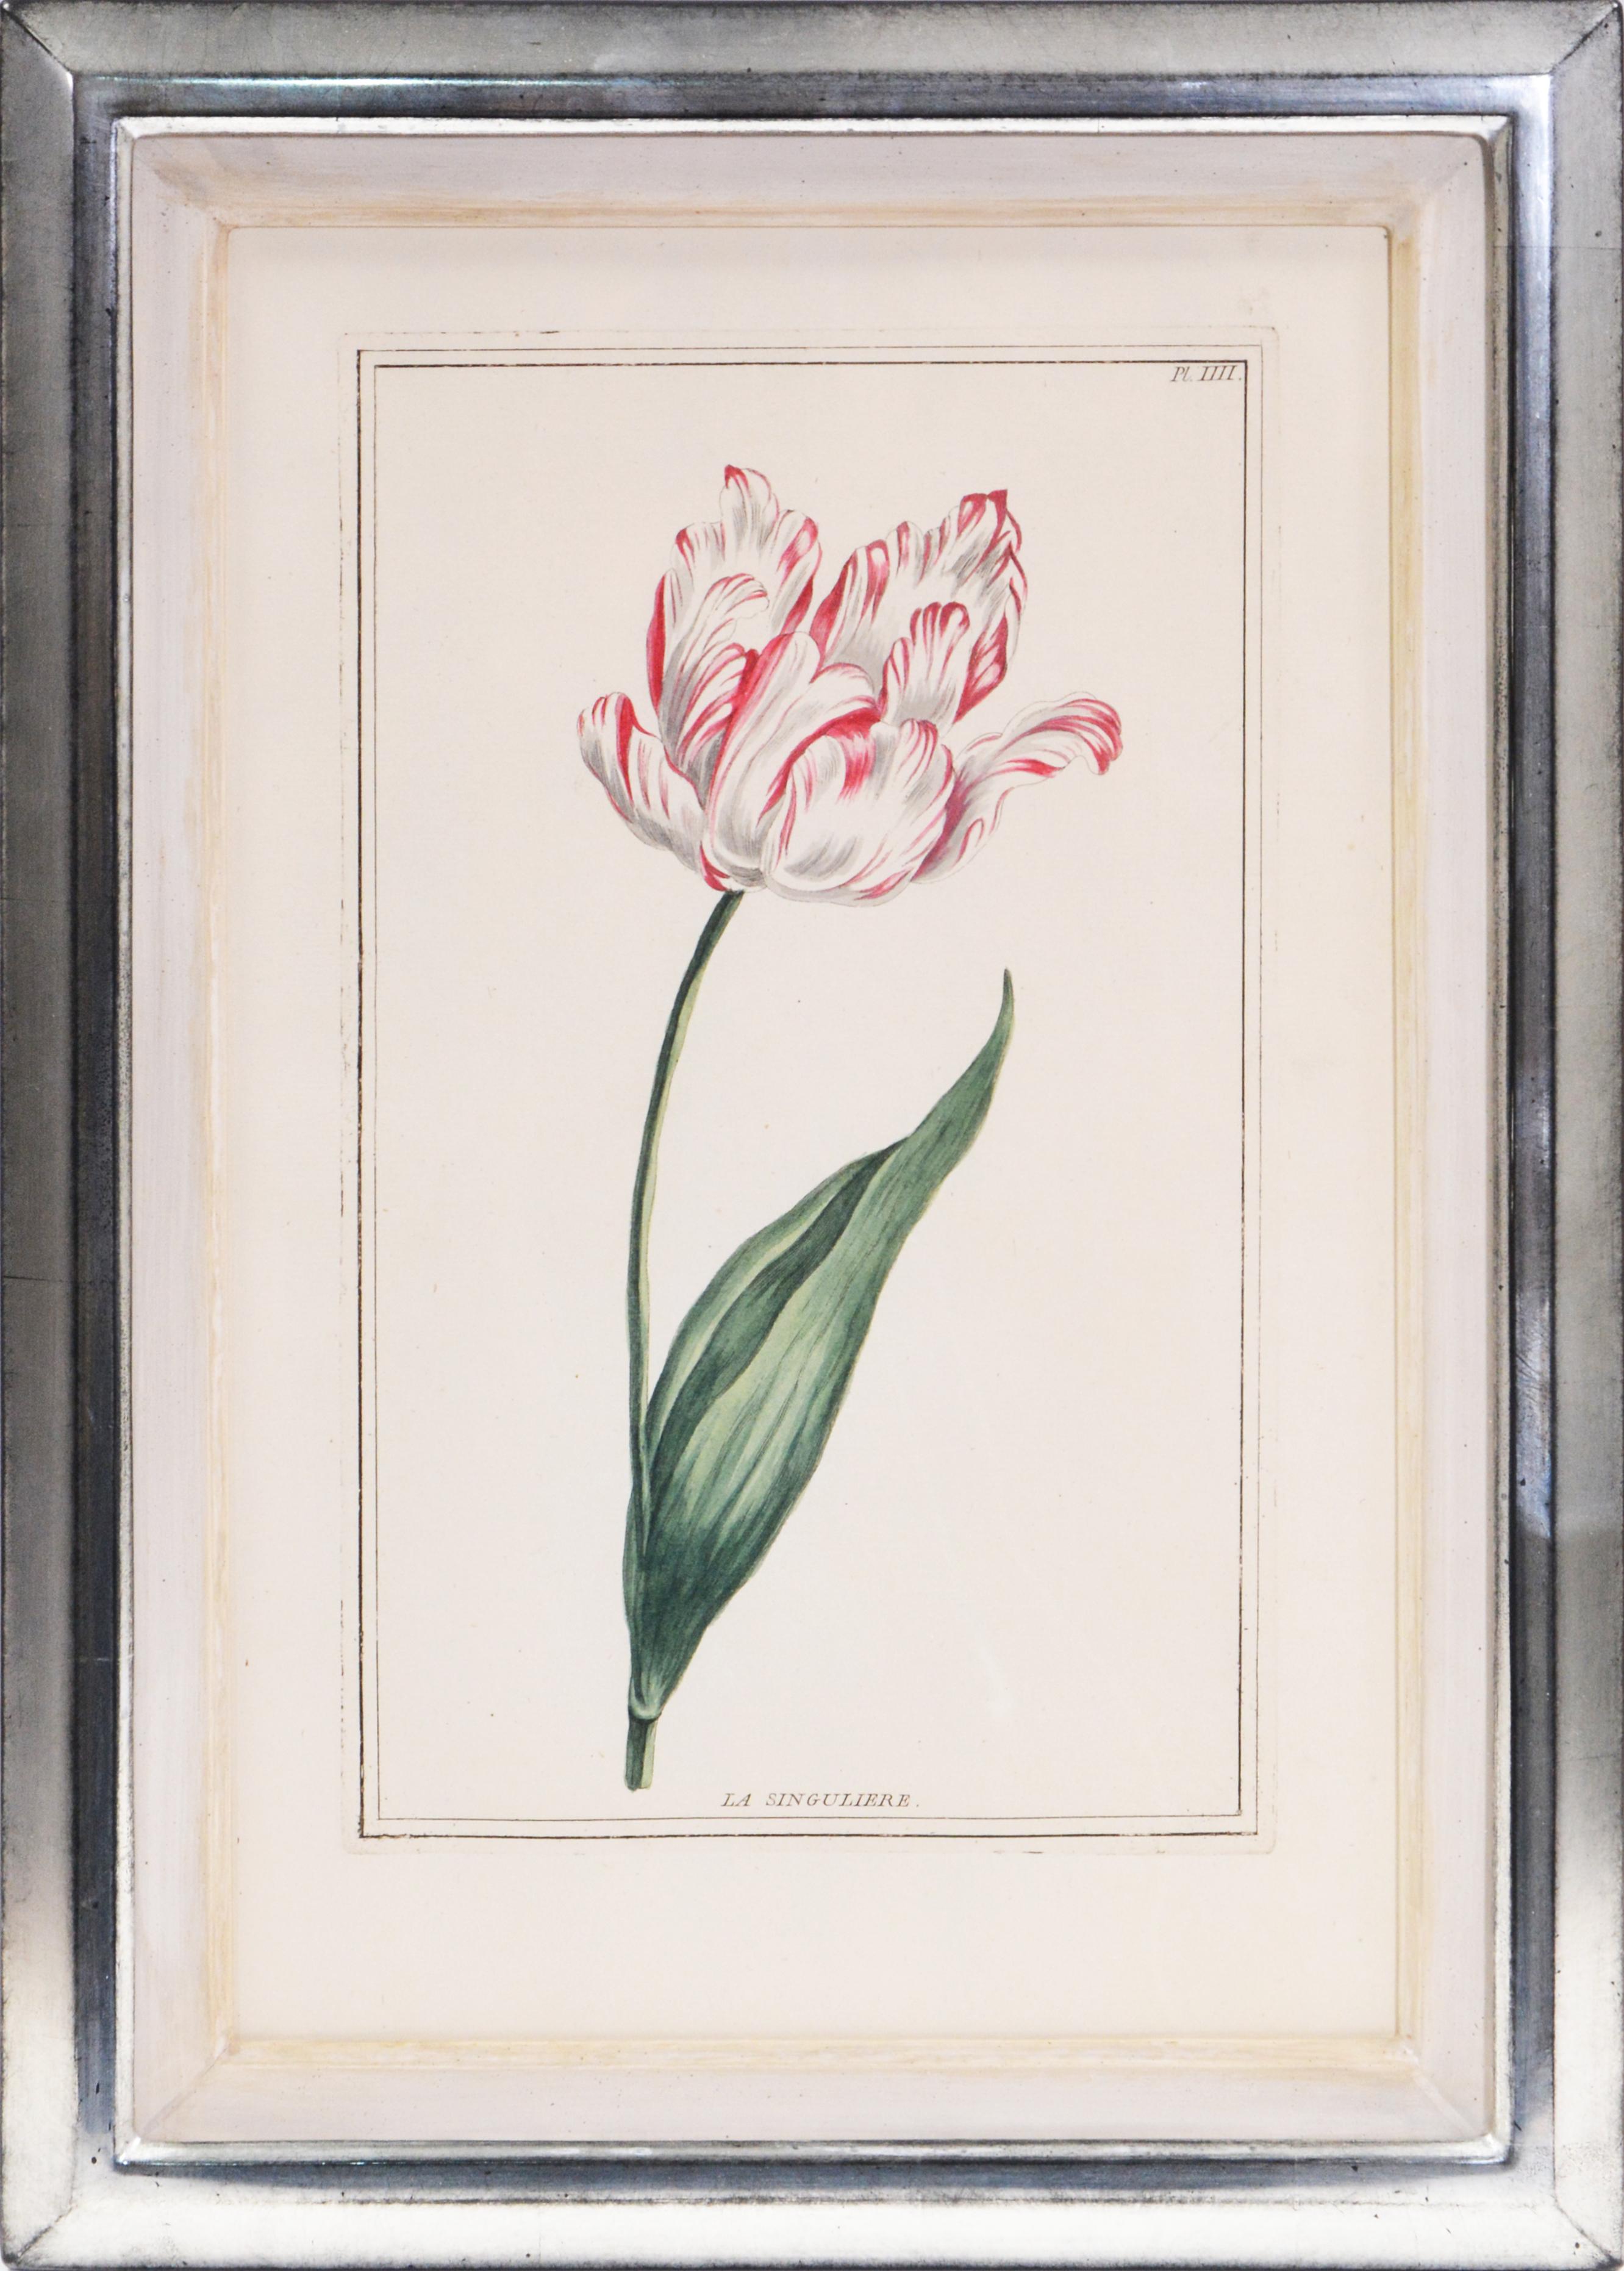 BUCHOZ. A Group of Six Tulips - Naturalistic Print by Pierre Joseph Buchoz